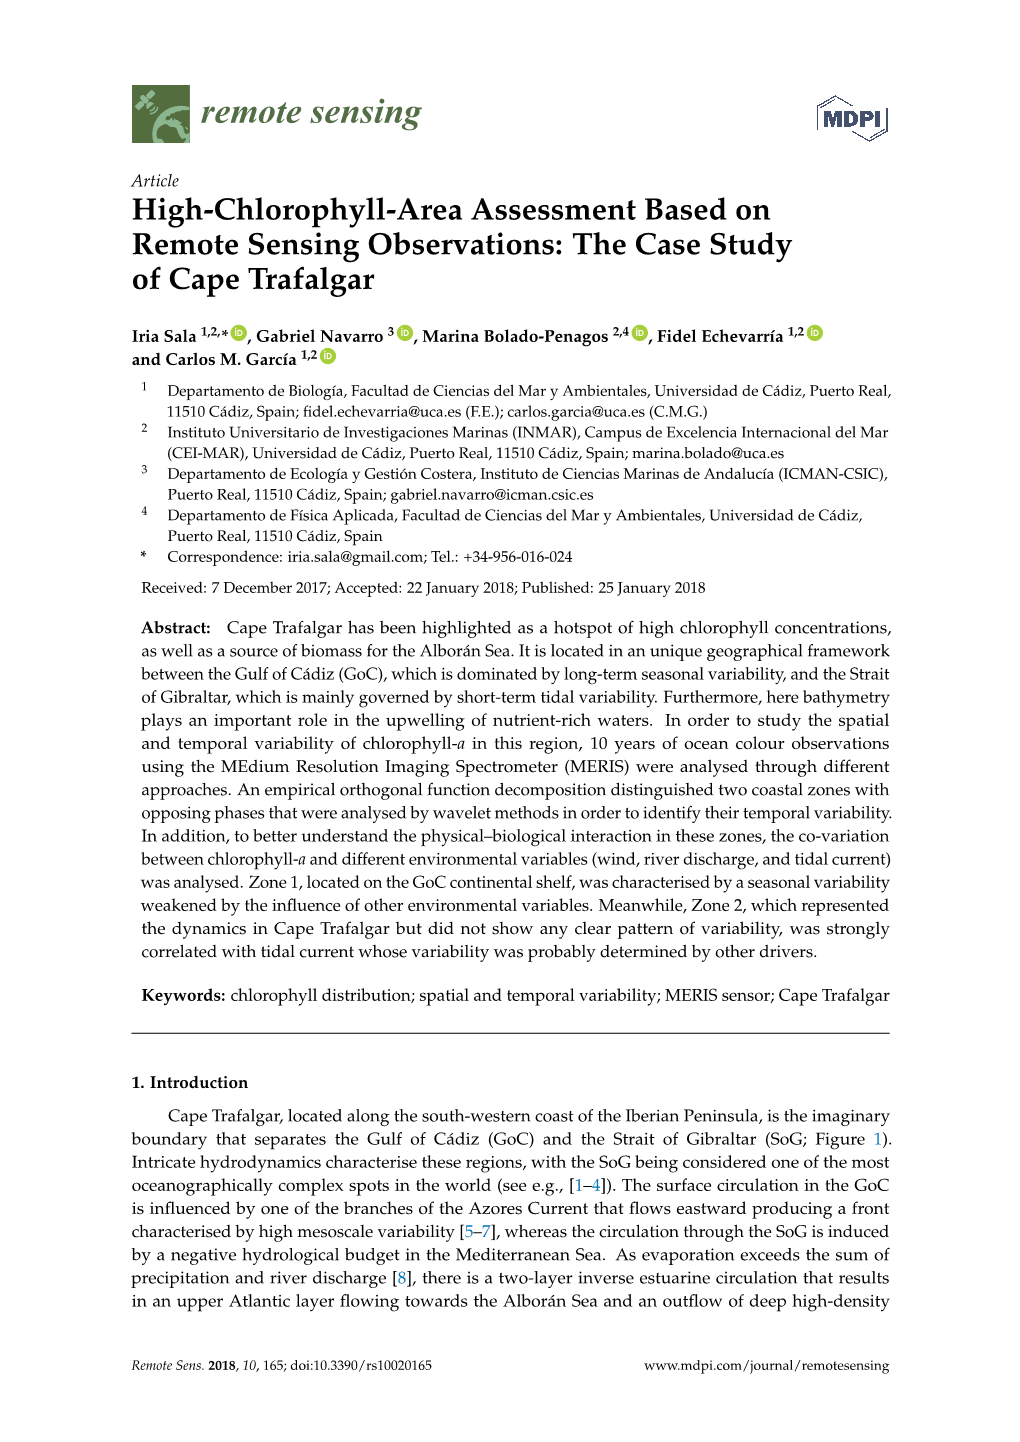 The Case Study of Cape Trafalgar